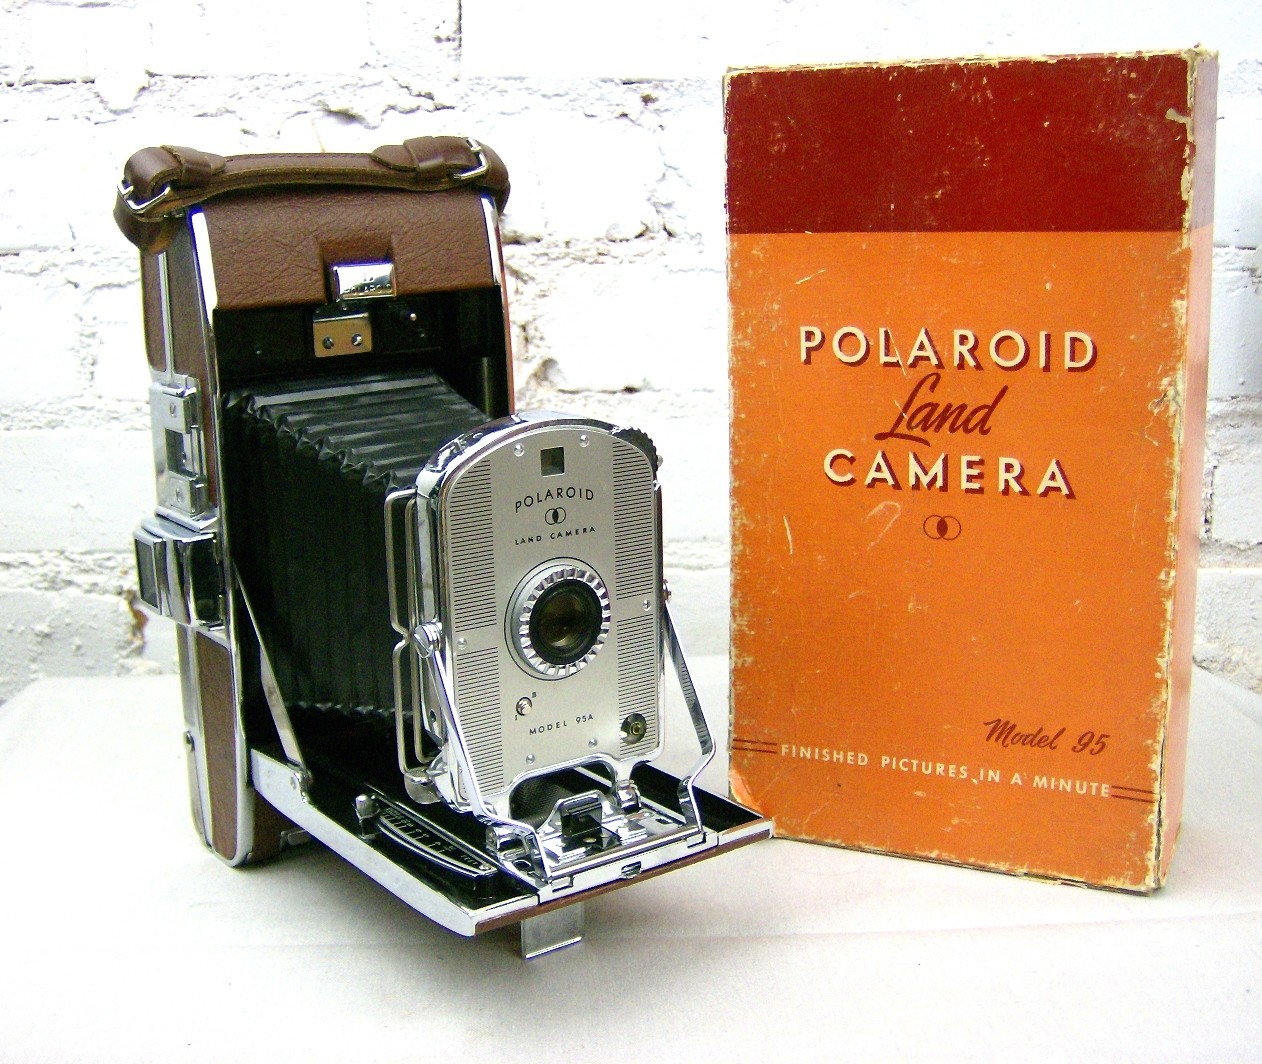 Fotos in Polaroid-Optik